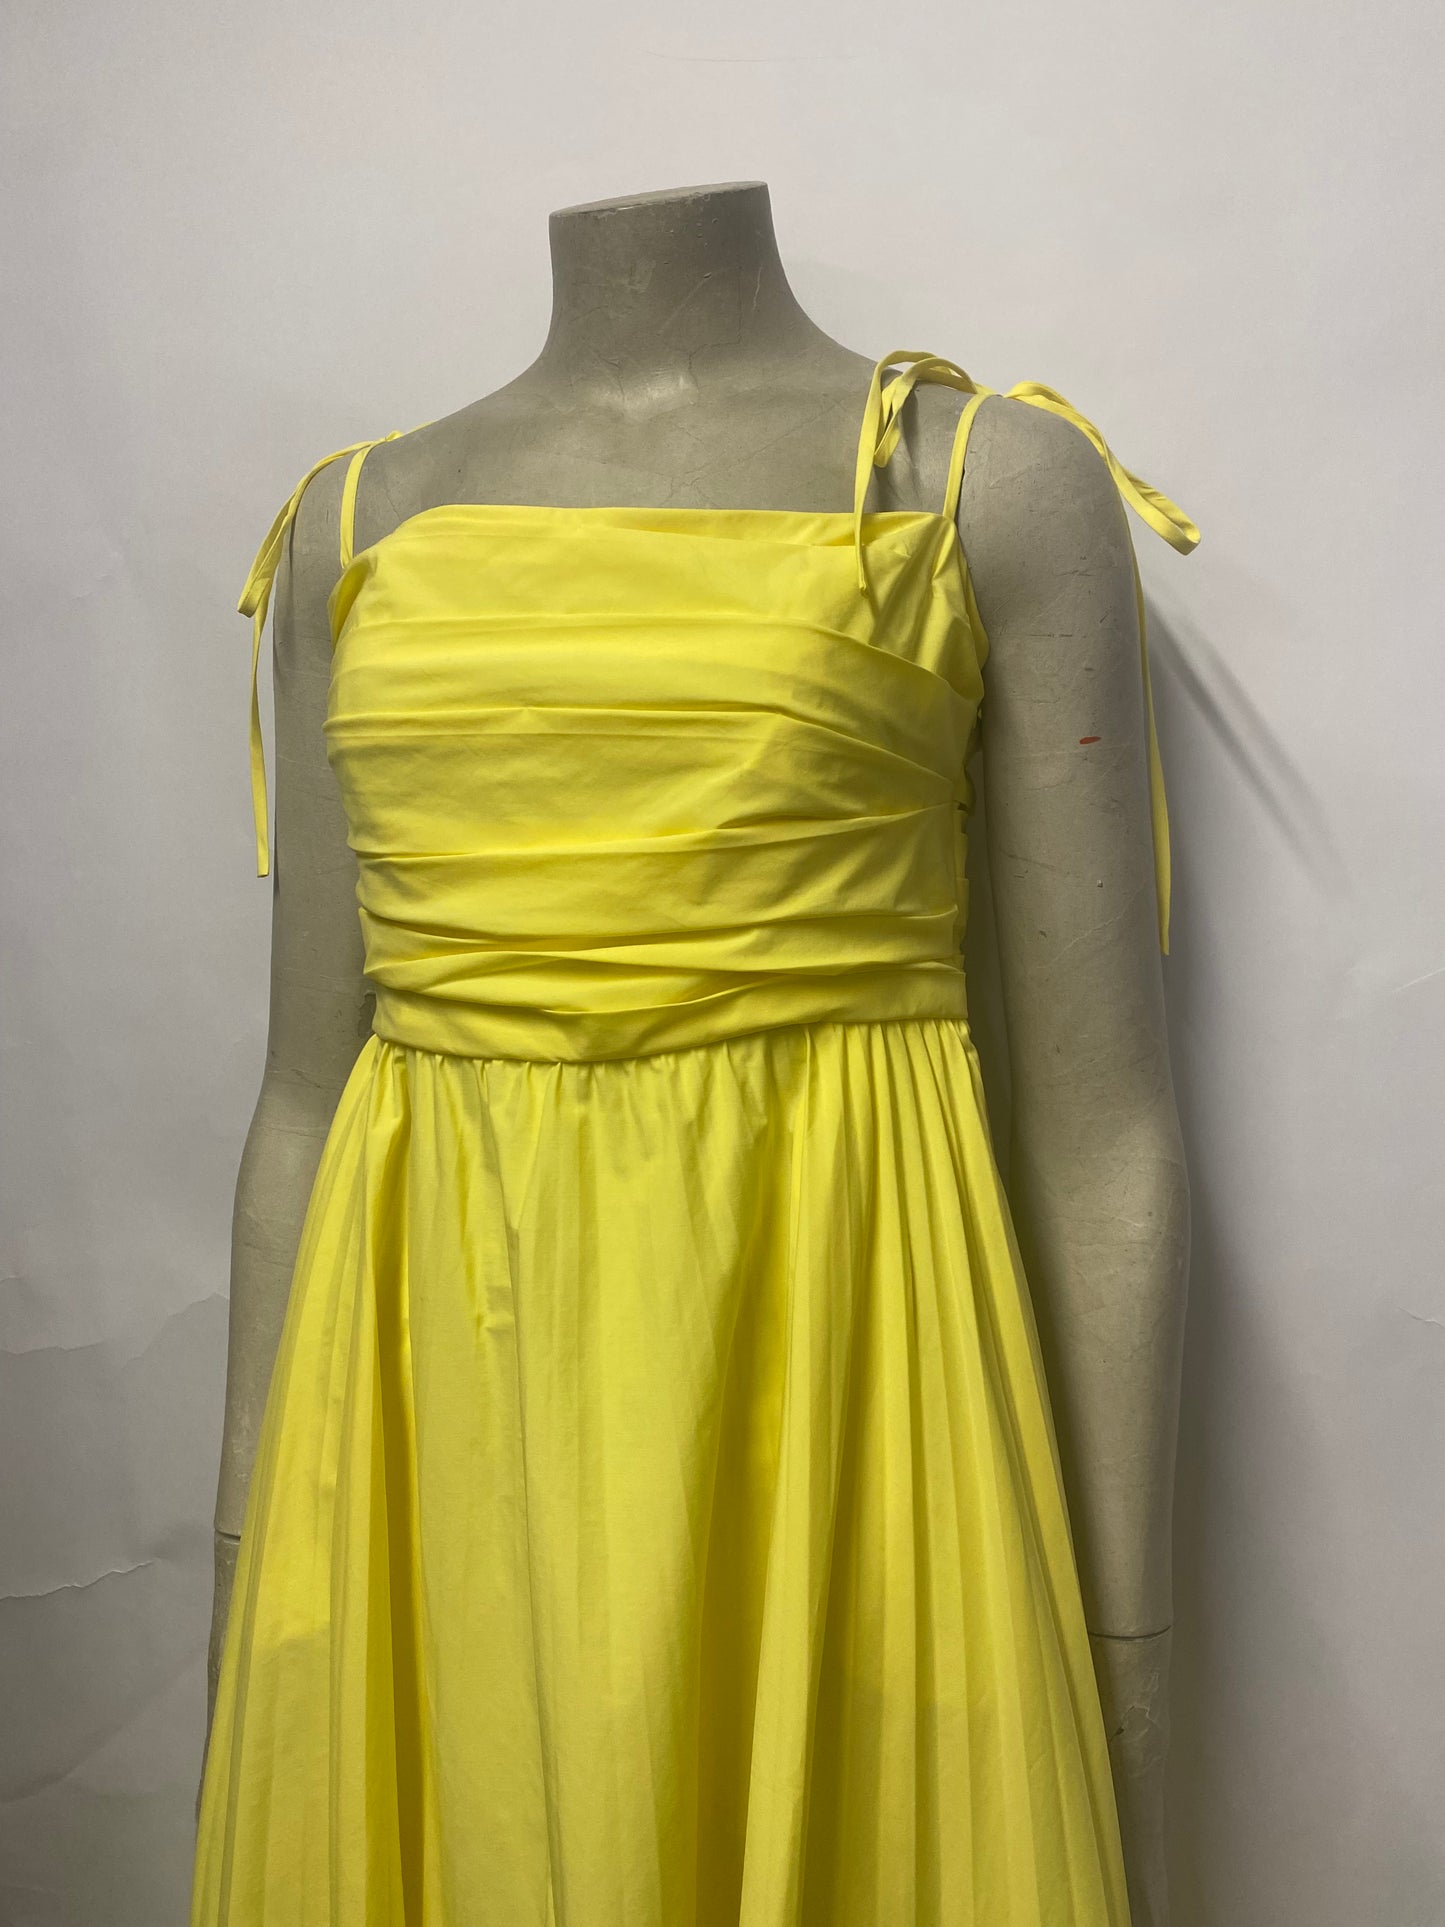 Jonathon Simkhai Lemon Yellow Pleated Spaghetti Strap Dress 8 BNWT